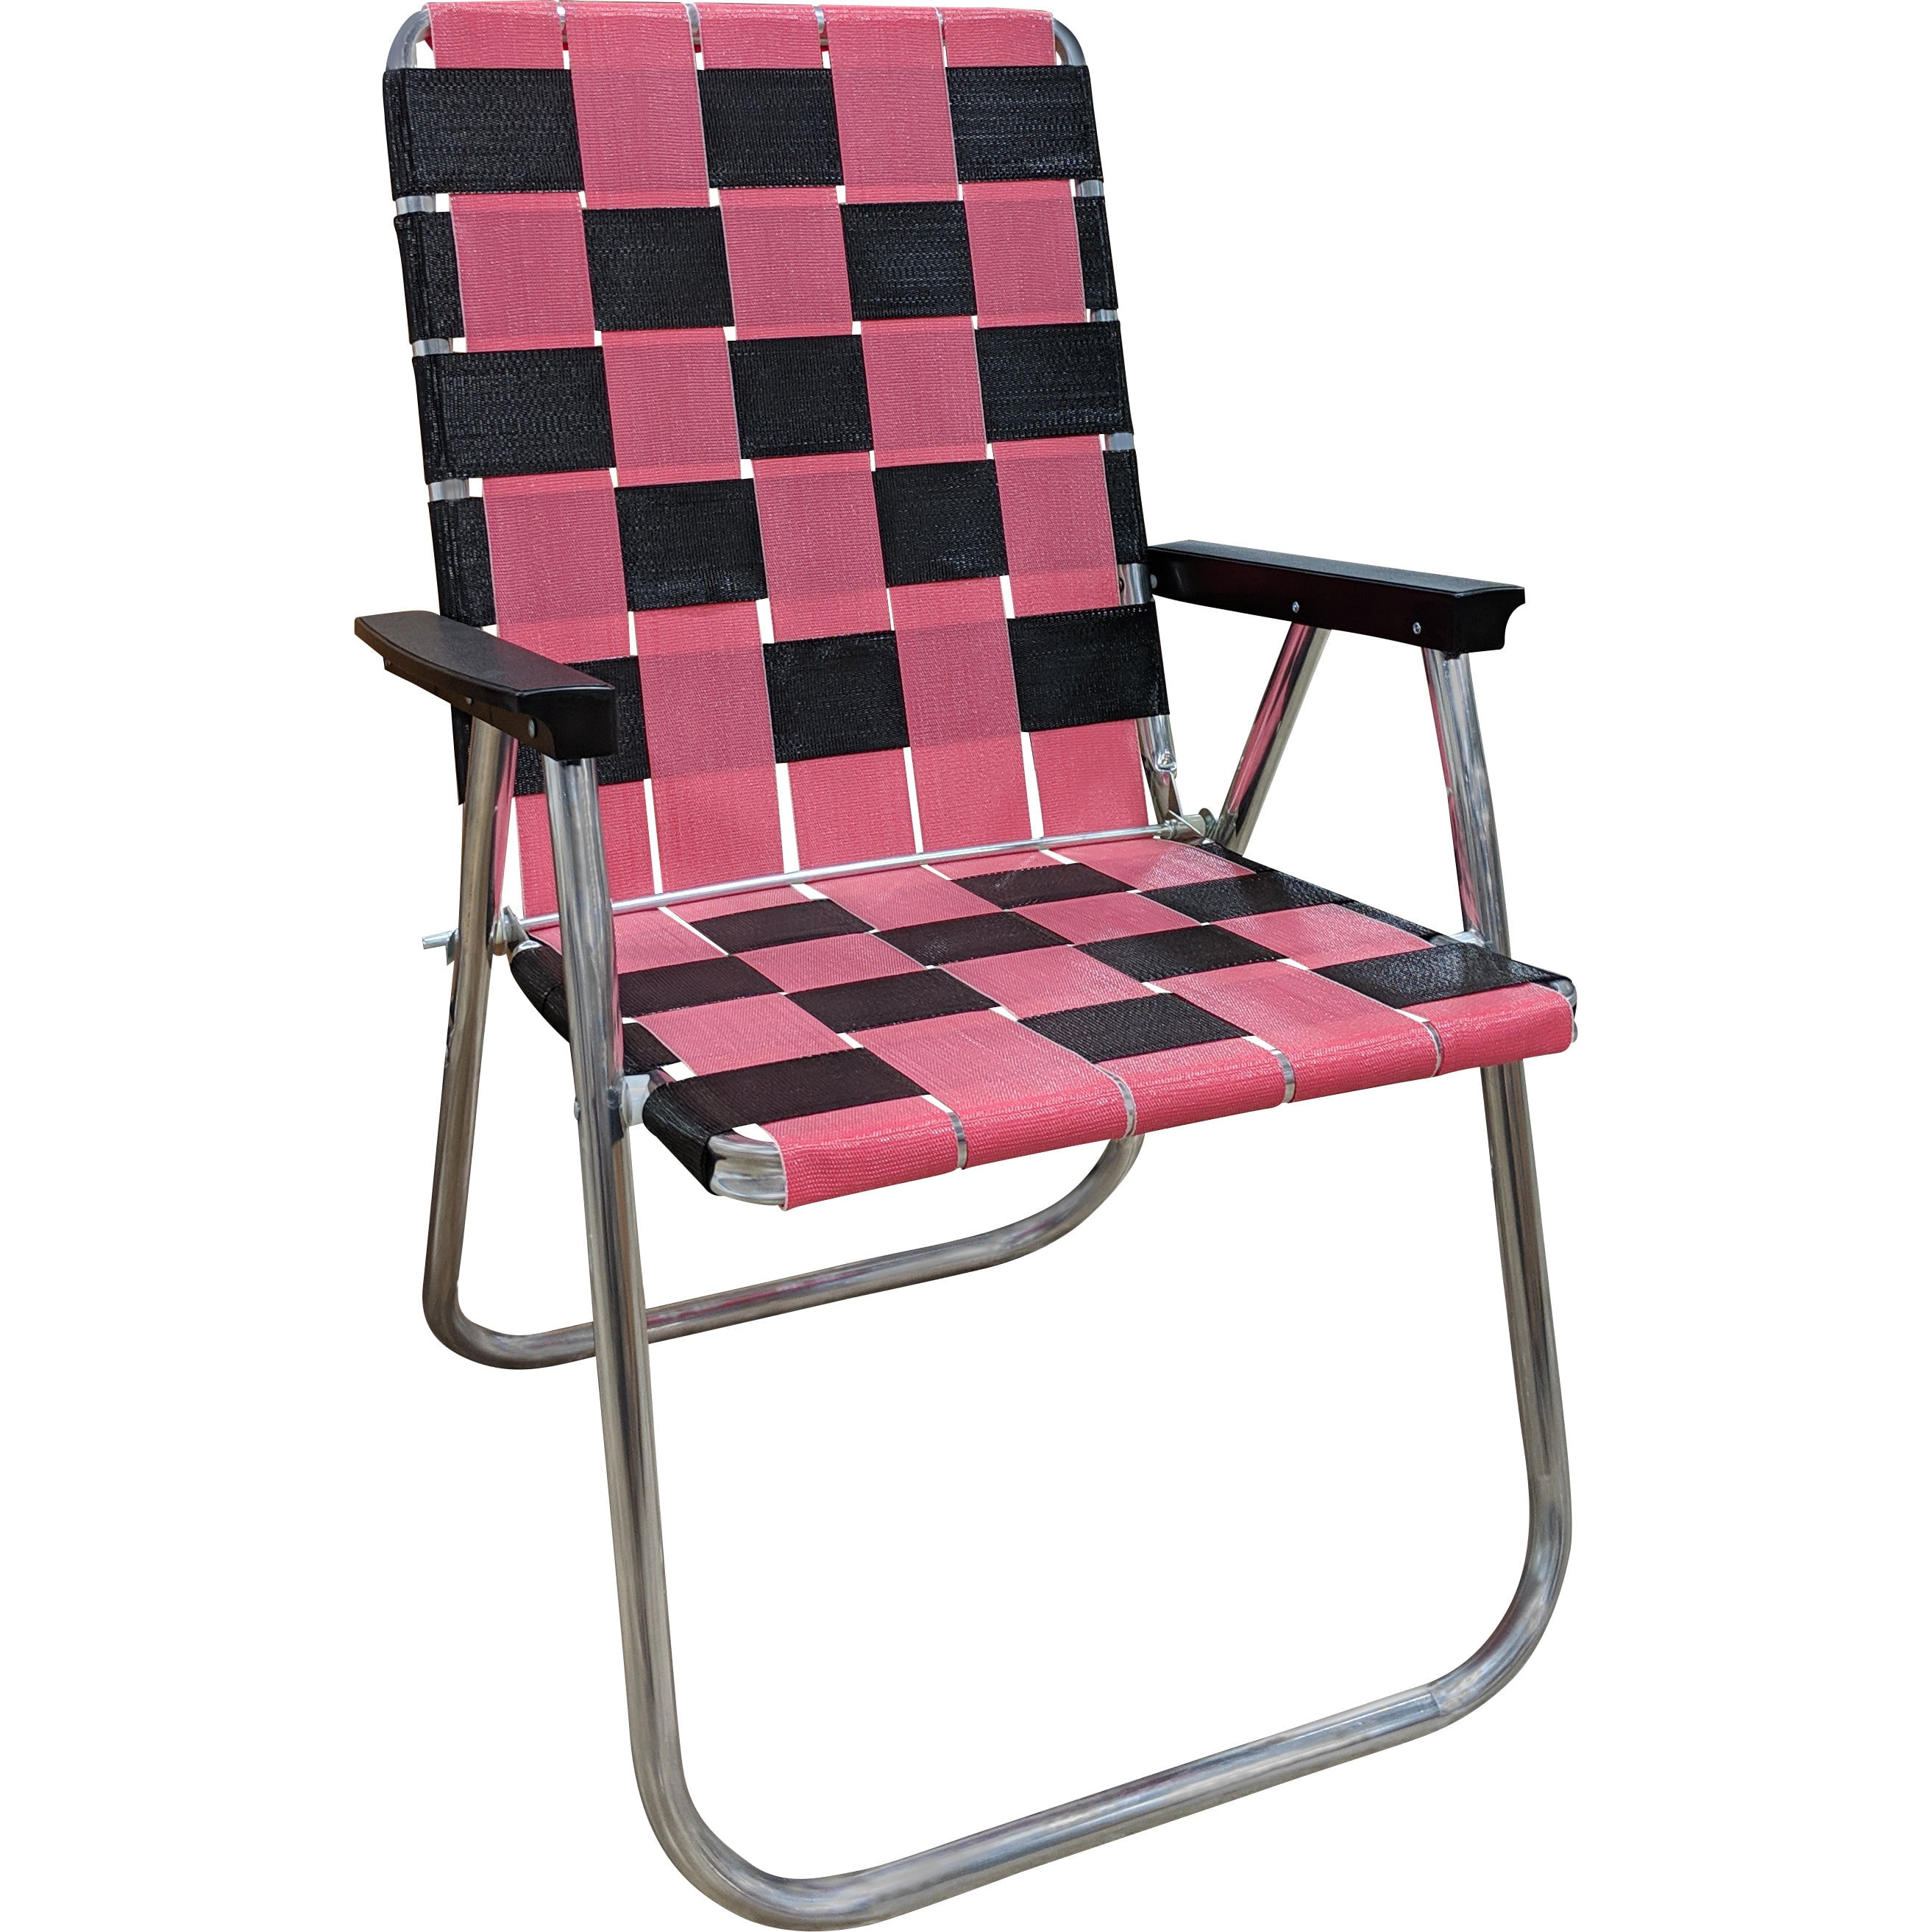 Lawn Chair USA American Made Folding Lightweight Aluminum Webbing